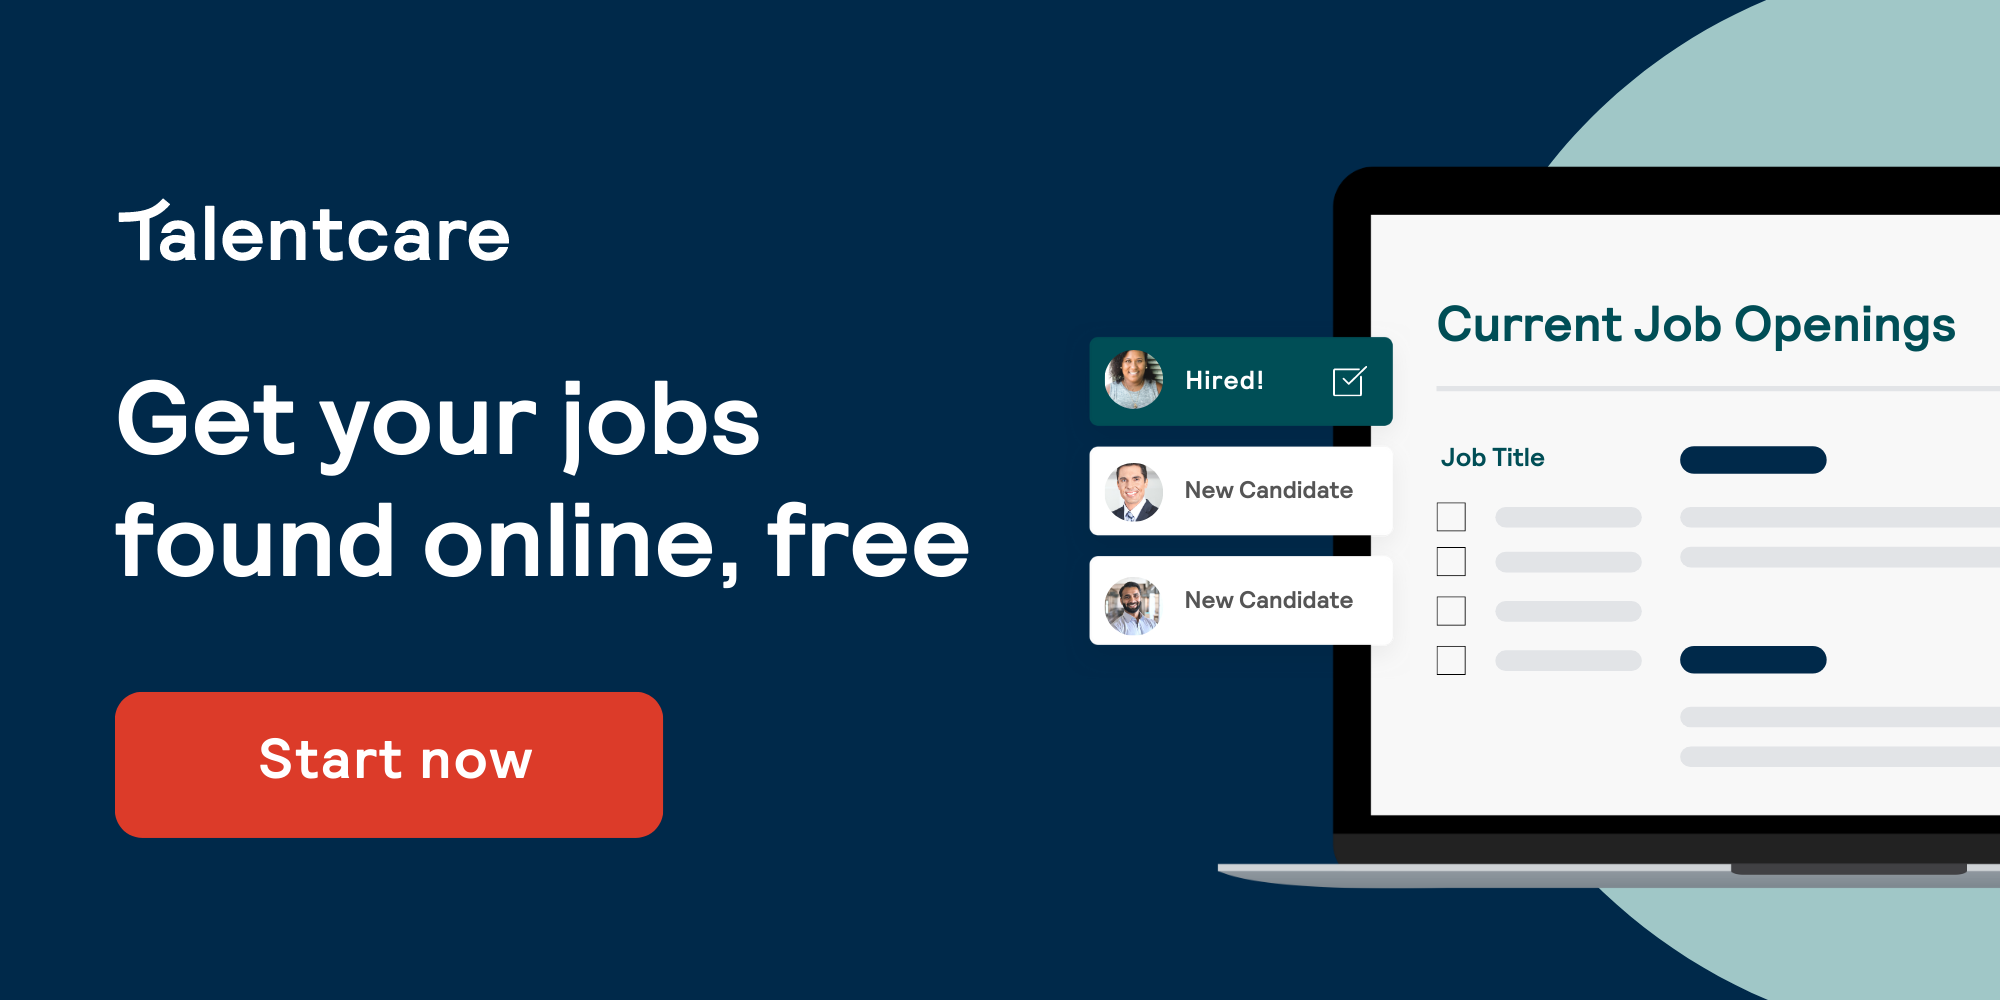 get-your-jobs-found-online-free-cta